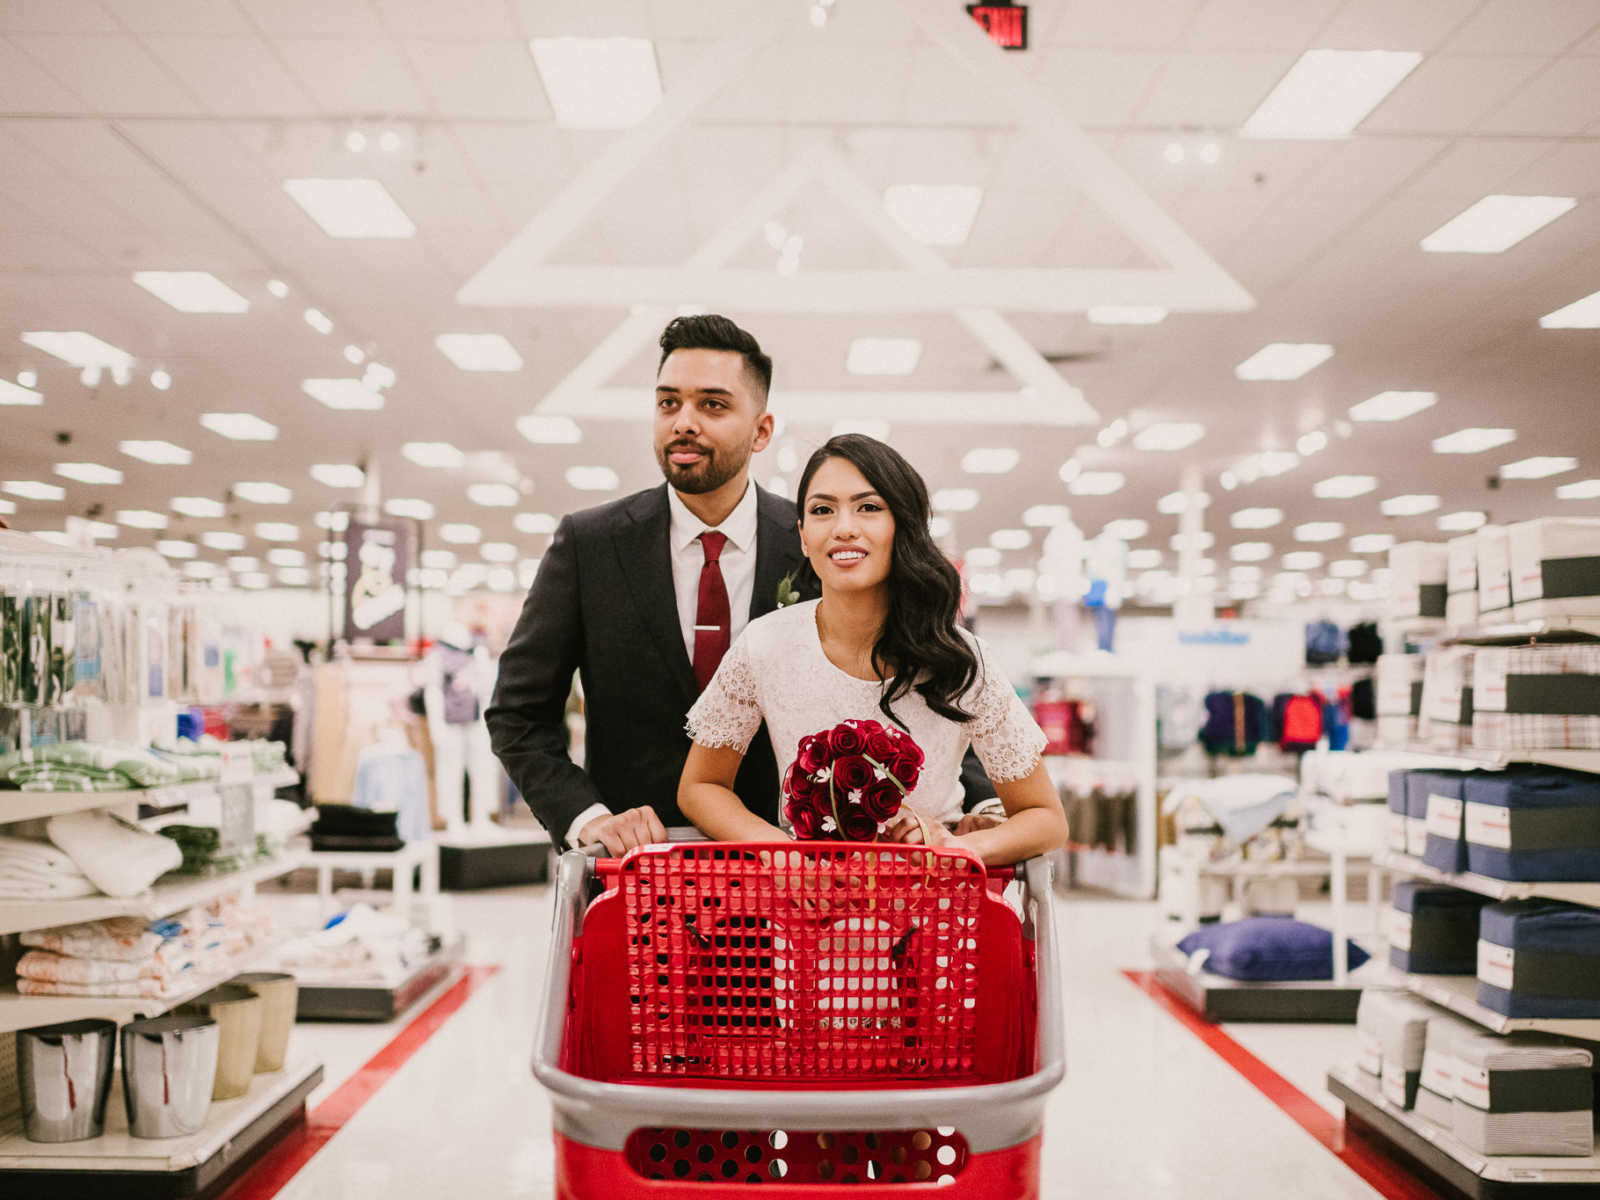 Bride and groom push shopping cart down an aisle at Target